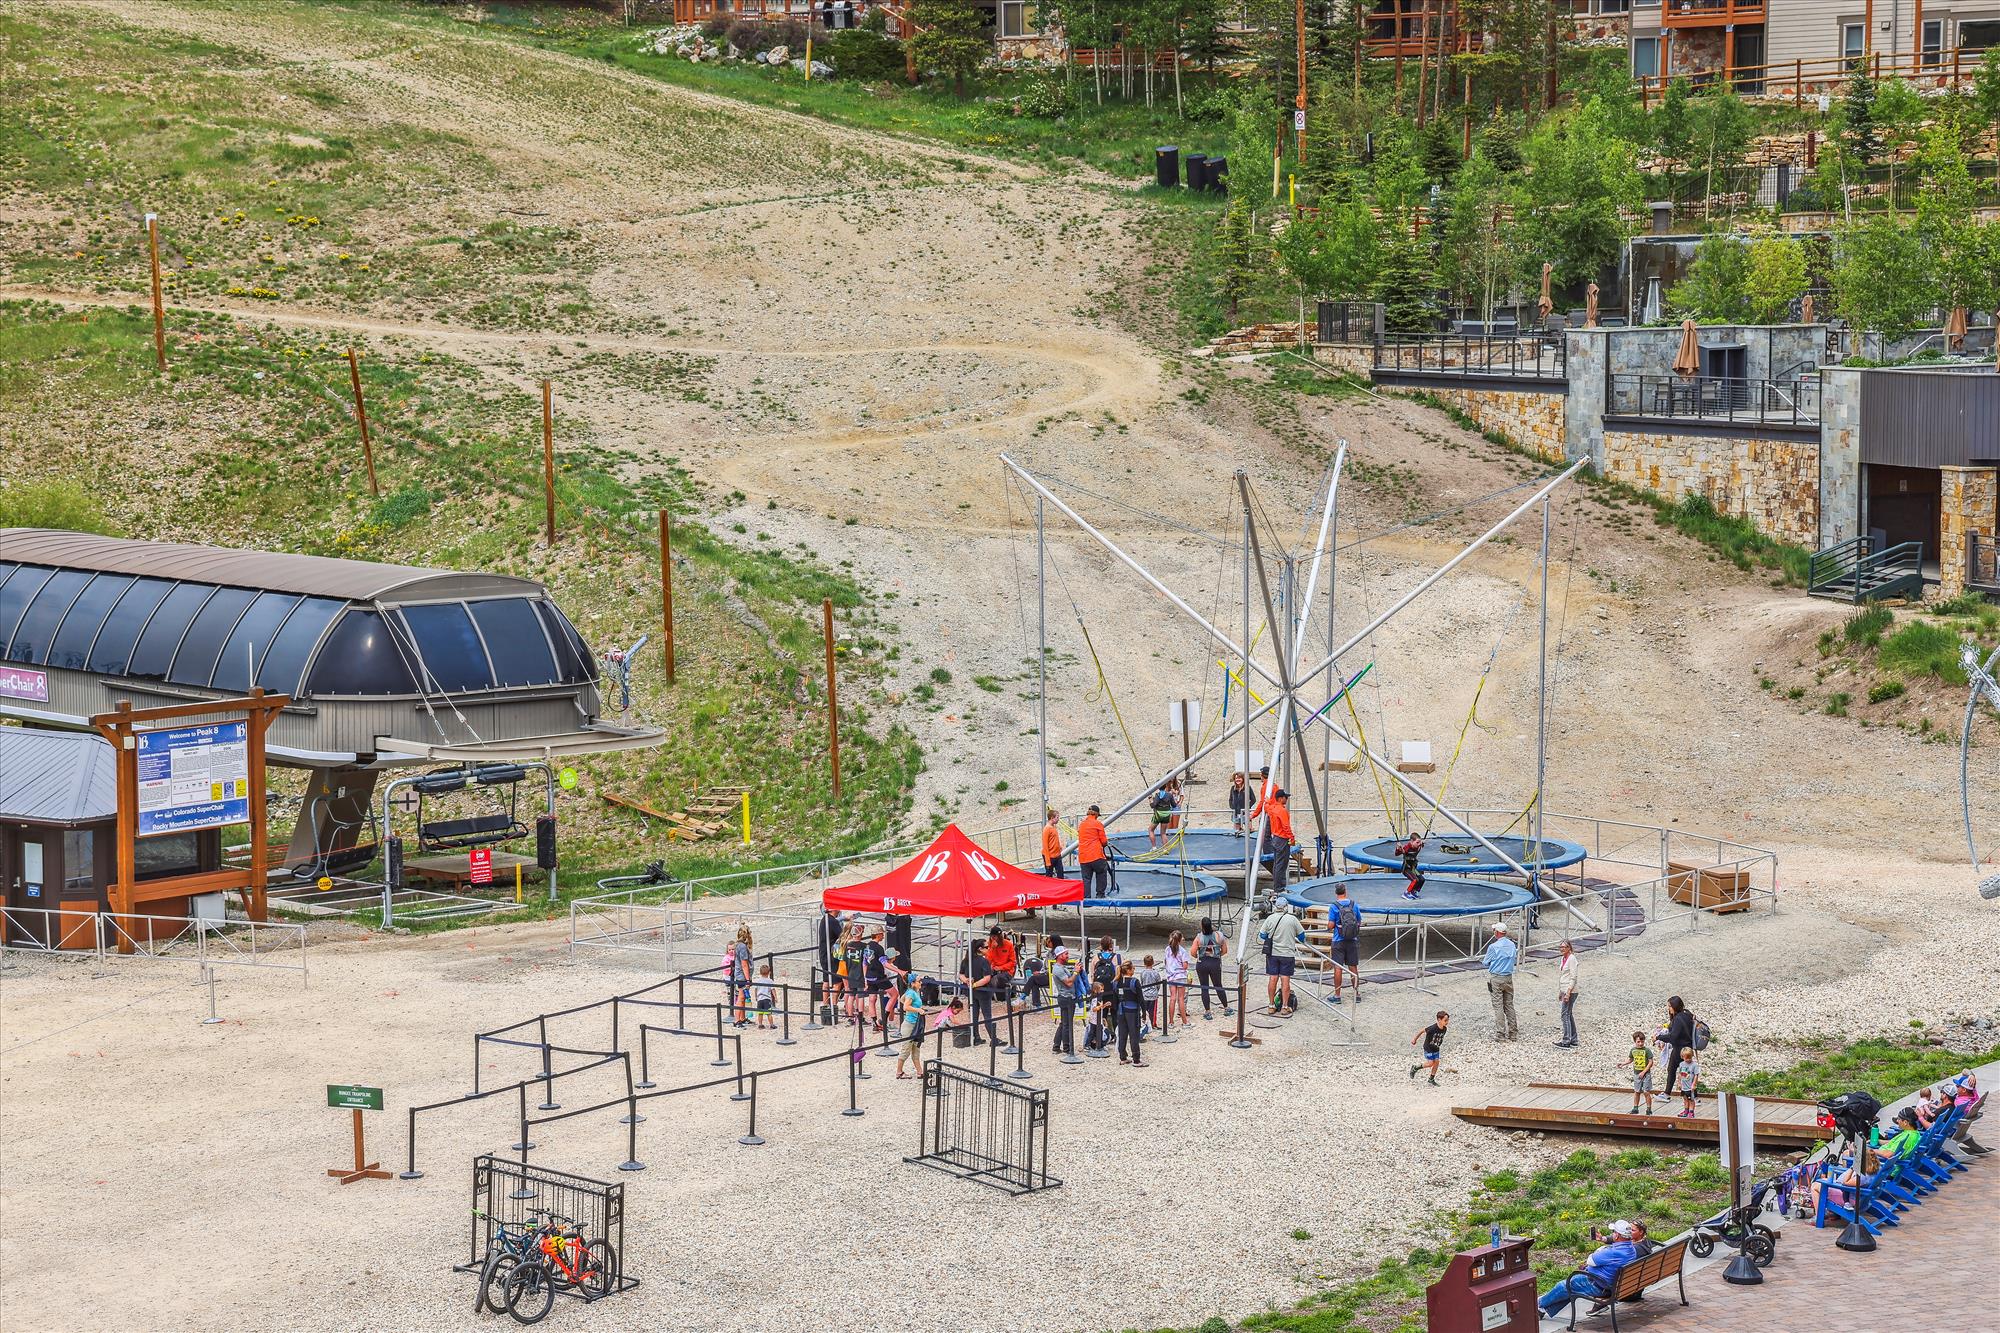 Peak 8 fun park trampoline area - One Ski Hill Place 8424 - Breckenridge Vacation Rental